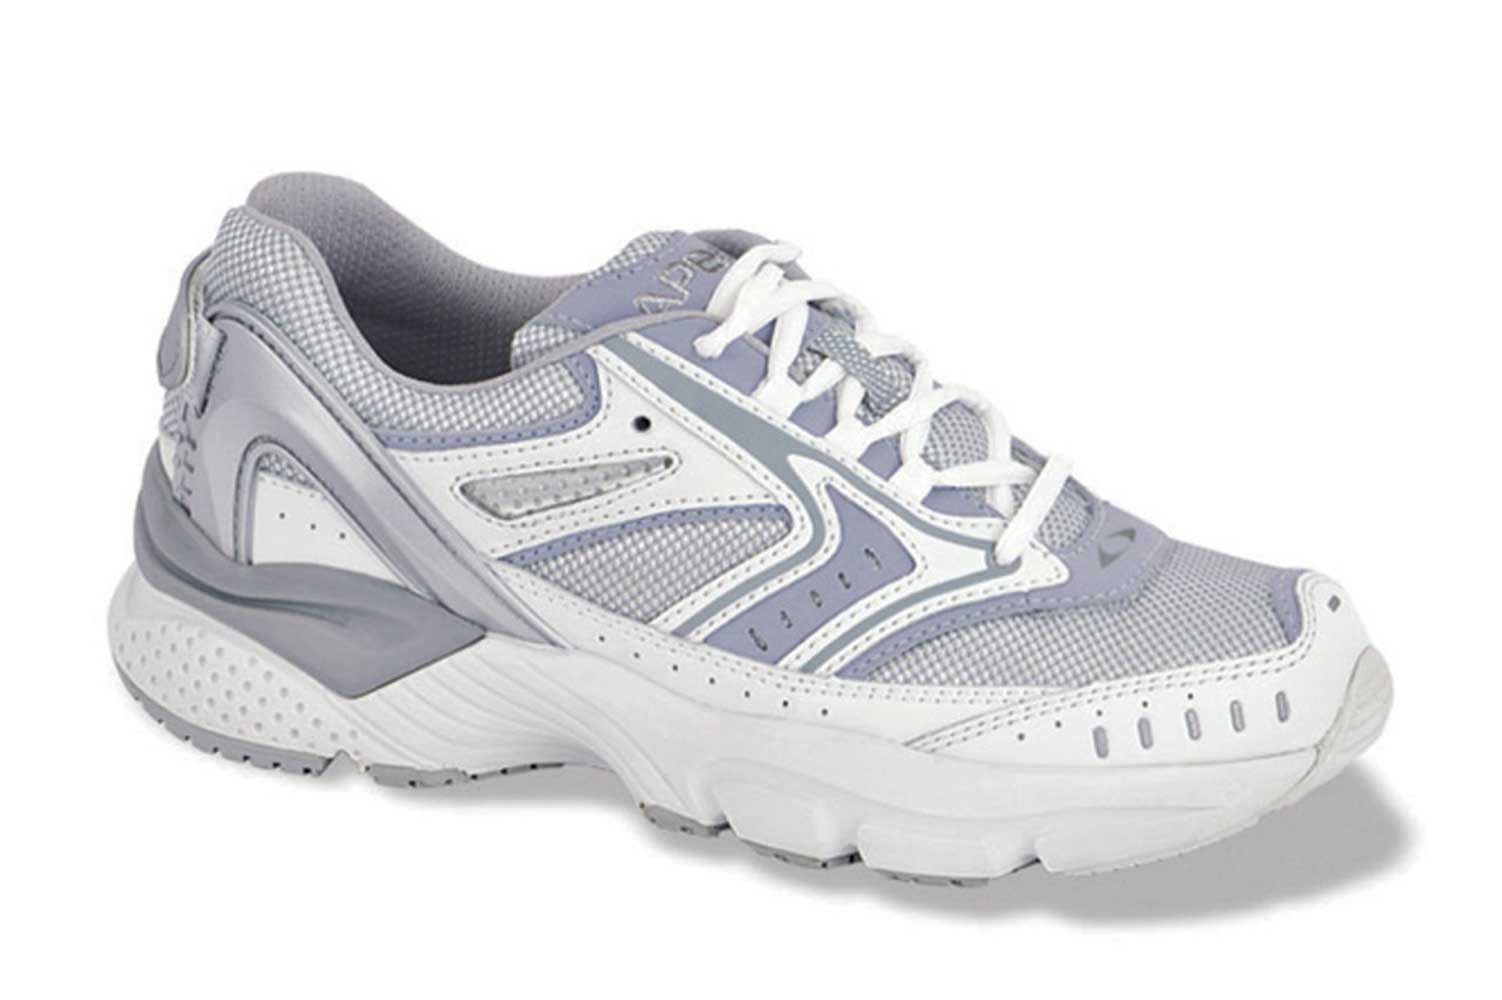 Apex Shoes X532W Reina Runner Athletic Shoe - Women's Comfort Therapeutic Diabetic Shoe - Medium - Extra Wide - Extra Depth For Orthotics